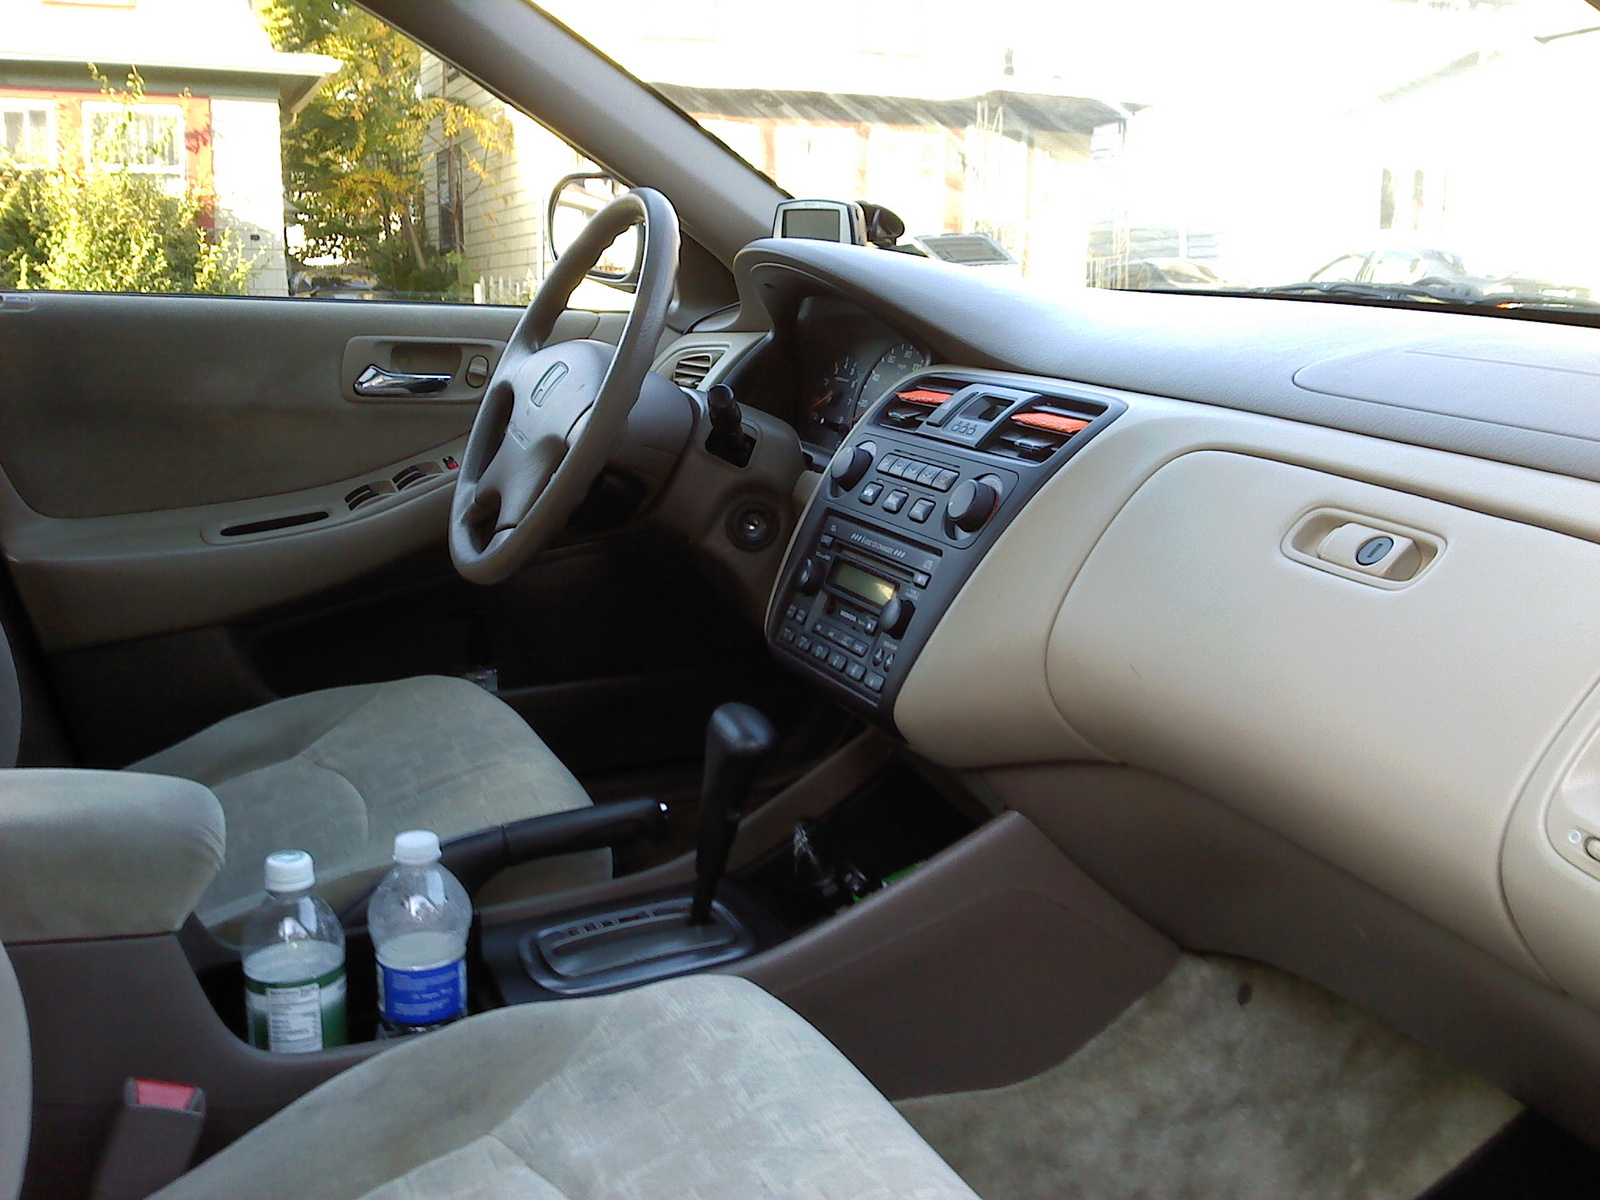 2002 Honda accord leather interior